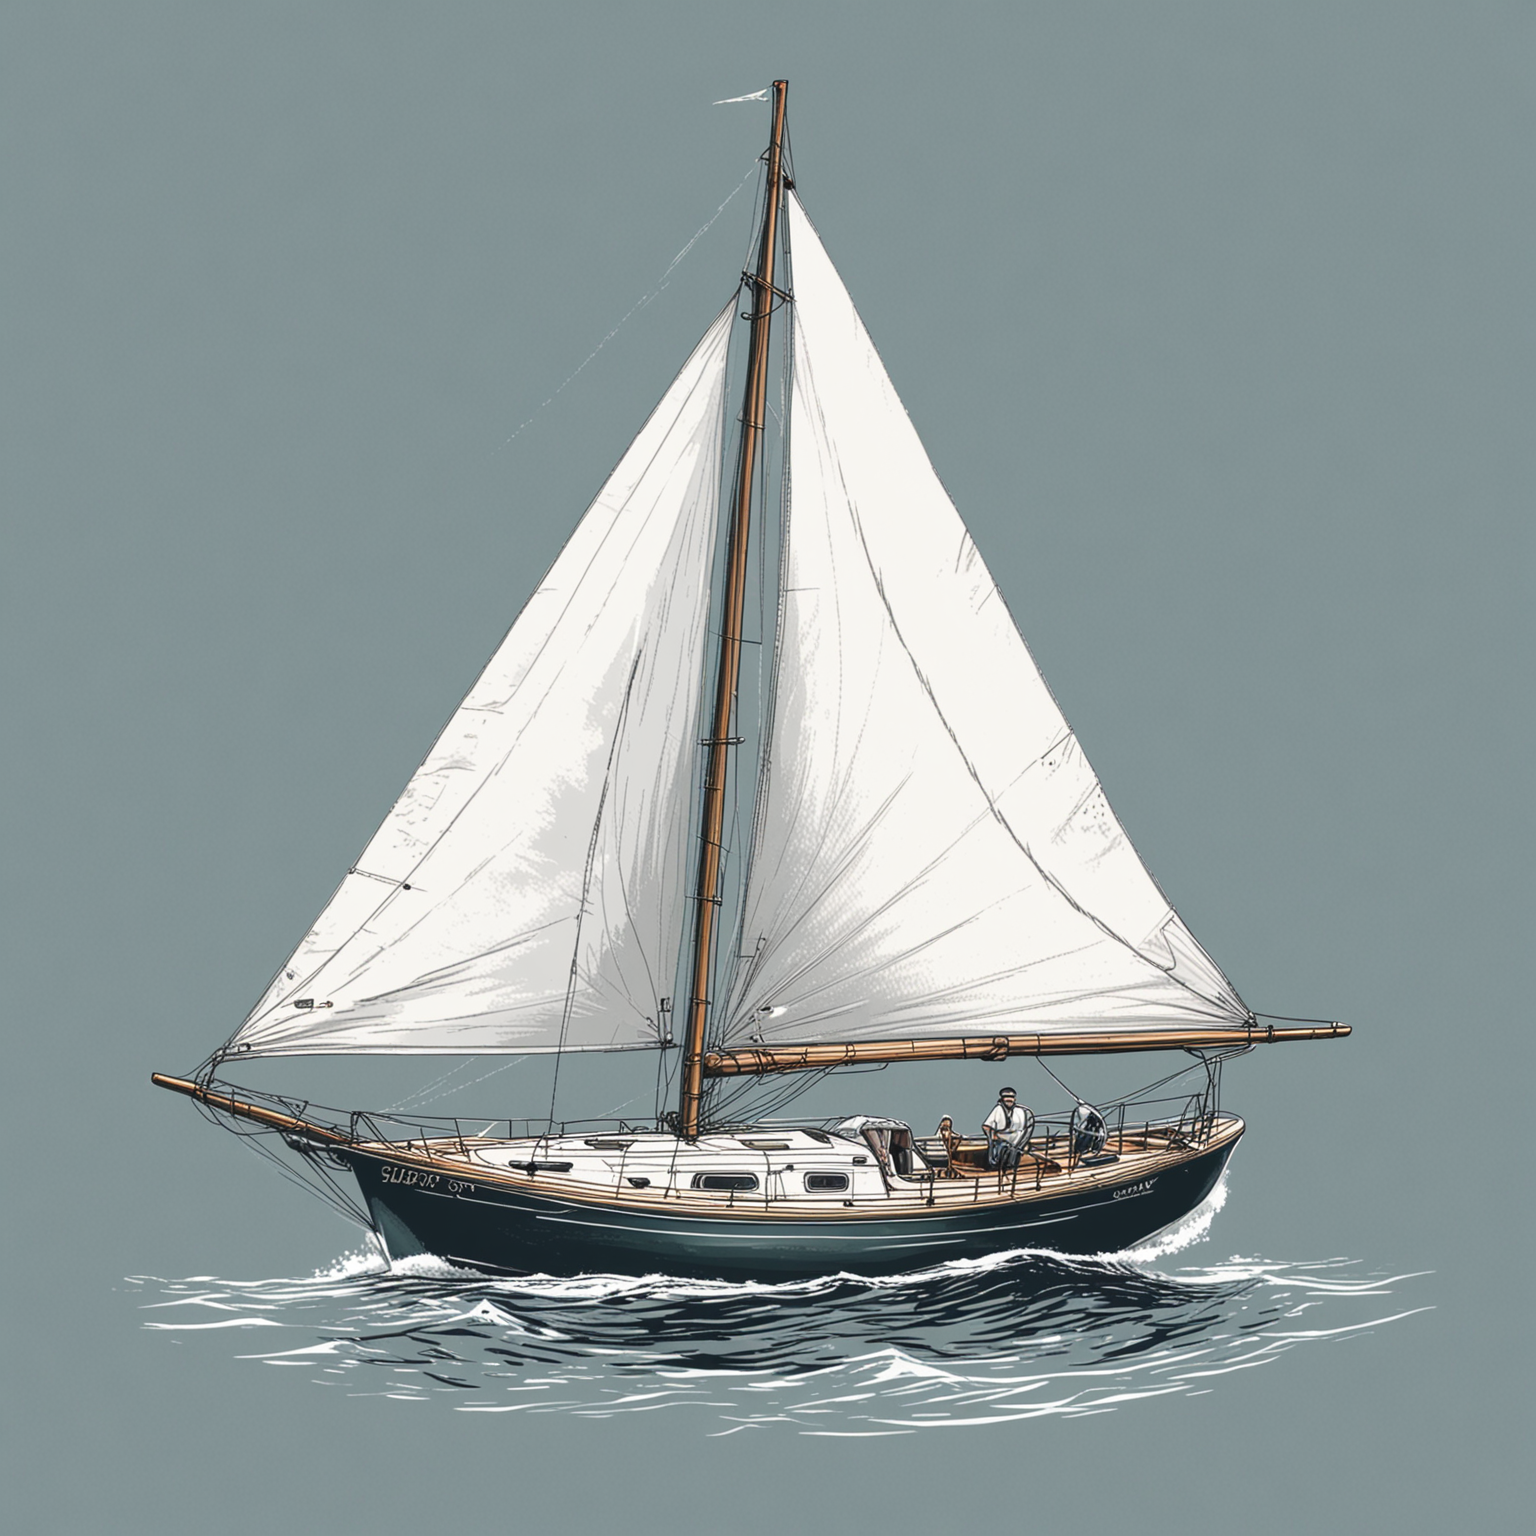 logo style image of a sailboat ,   
, logo style,  sloop sailboat, single mast sailboat, no background, thick marker lines
